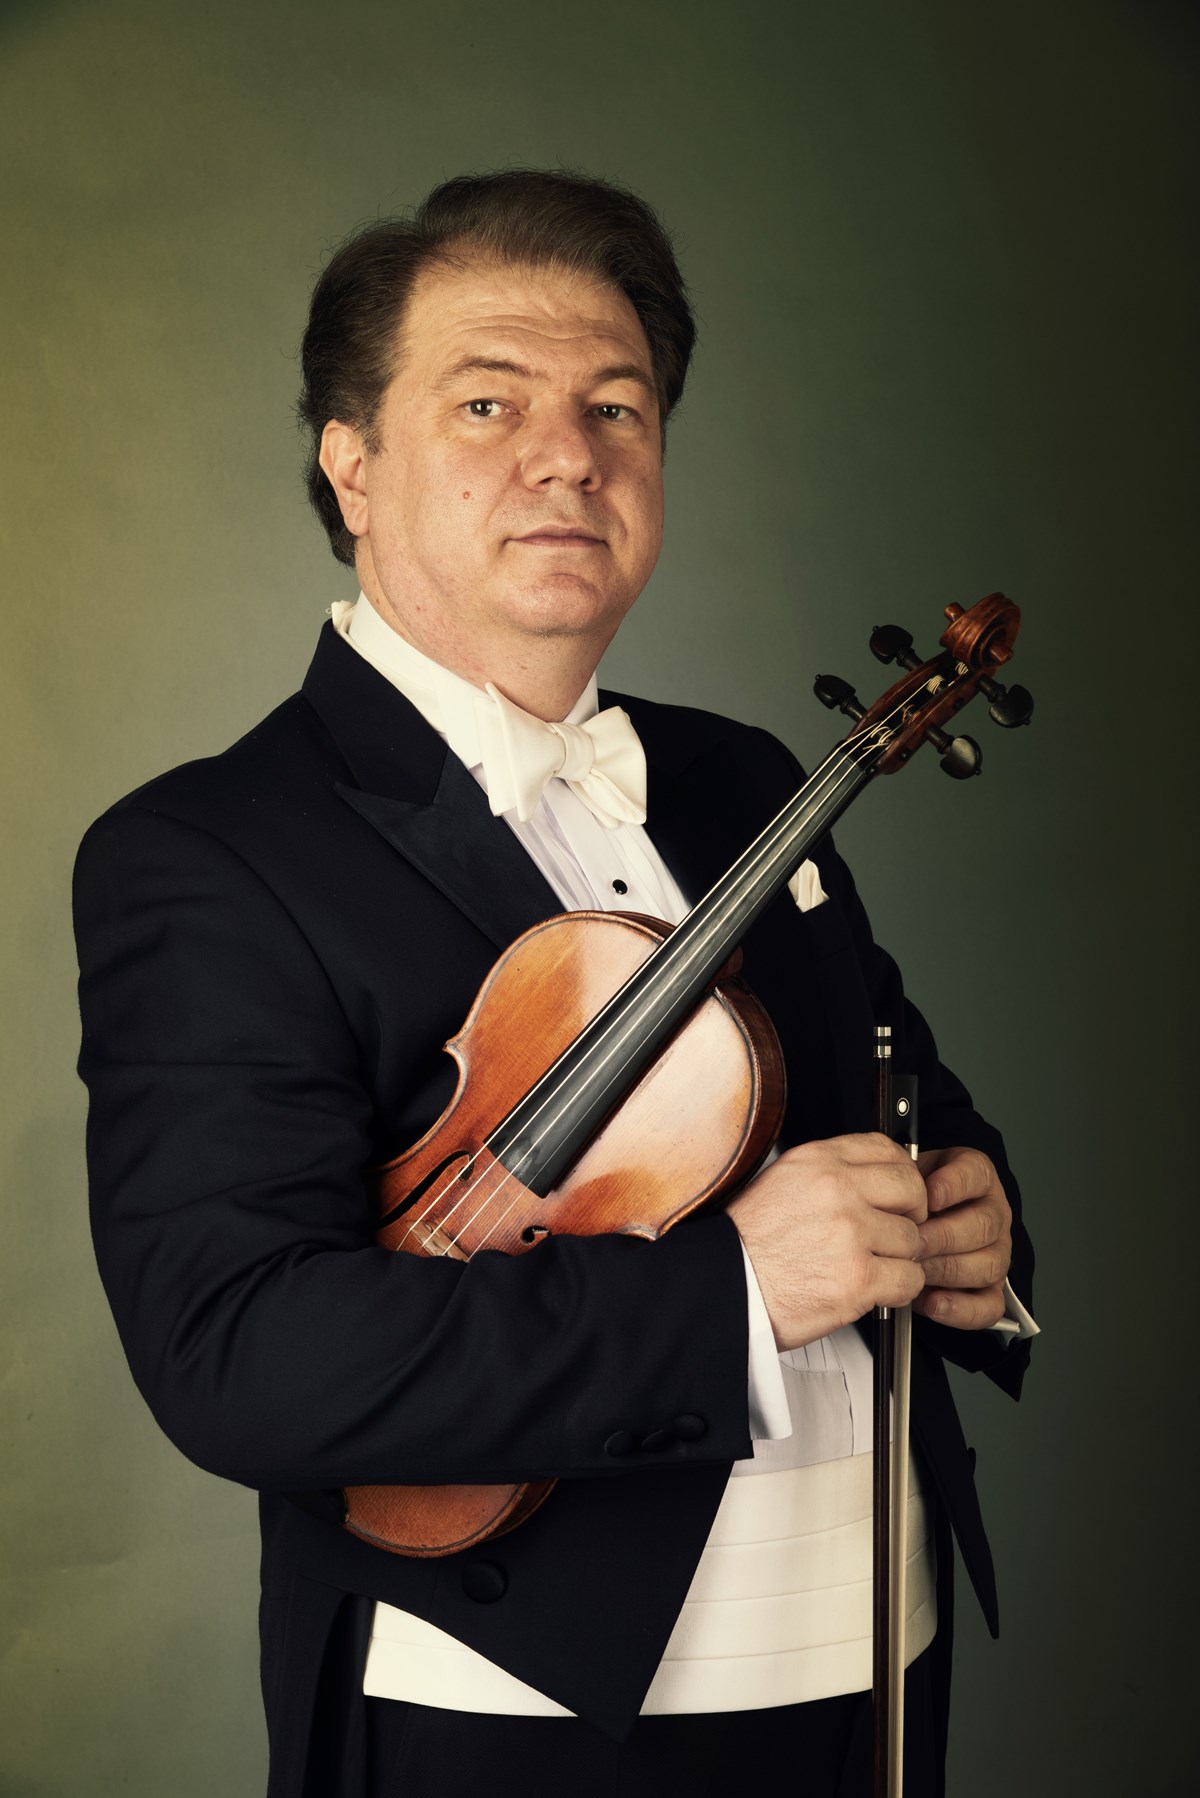 The famous violin virtuoso Cihat Aşkın will accompany the orchestra at the April 23 concert.